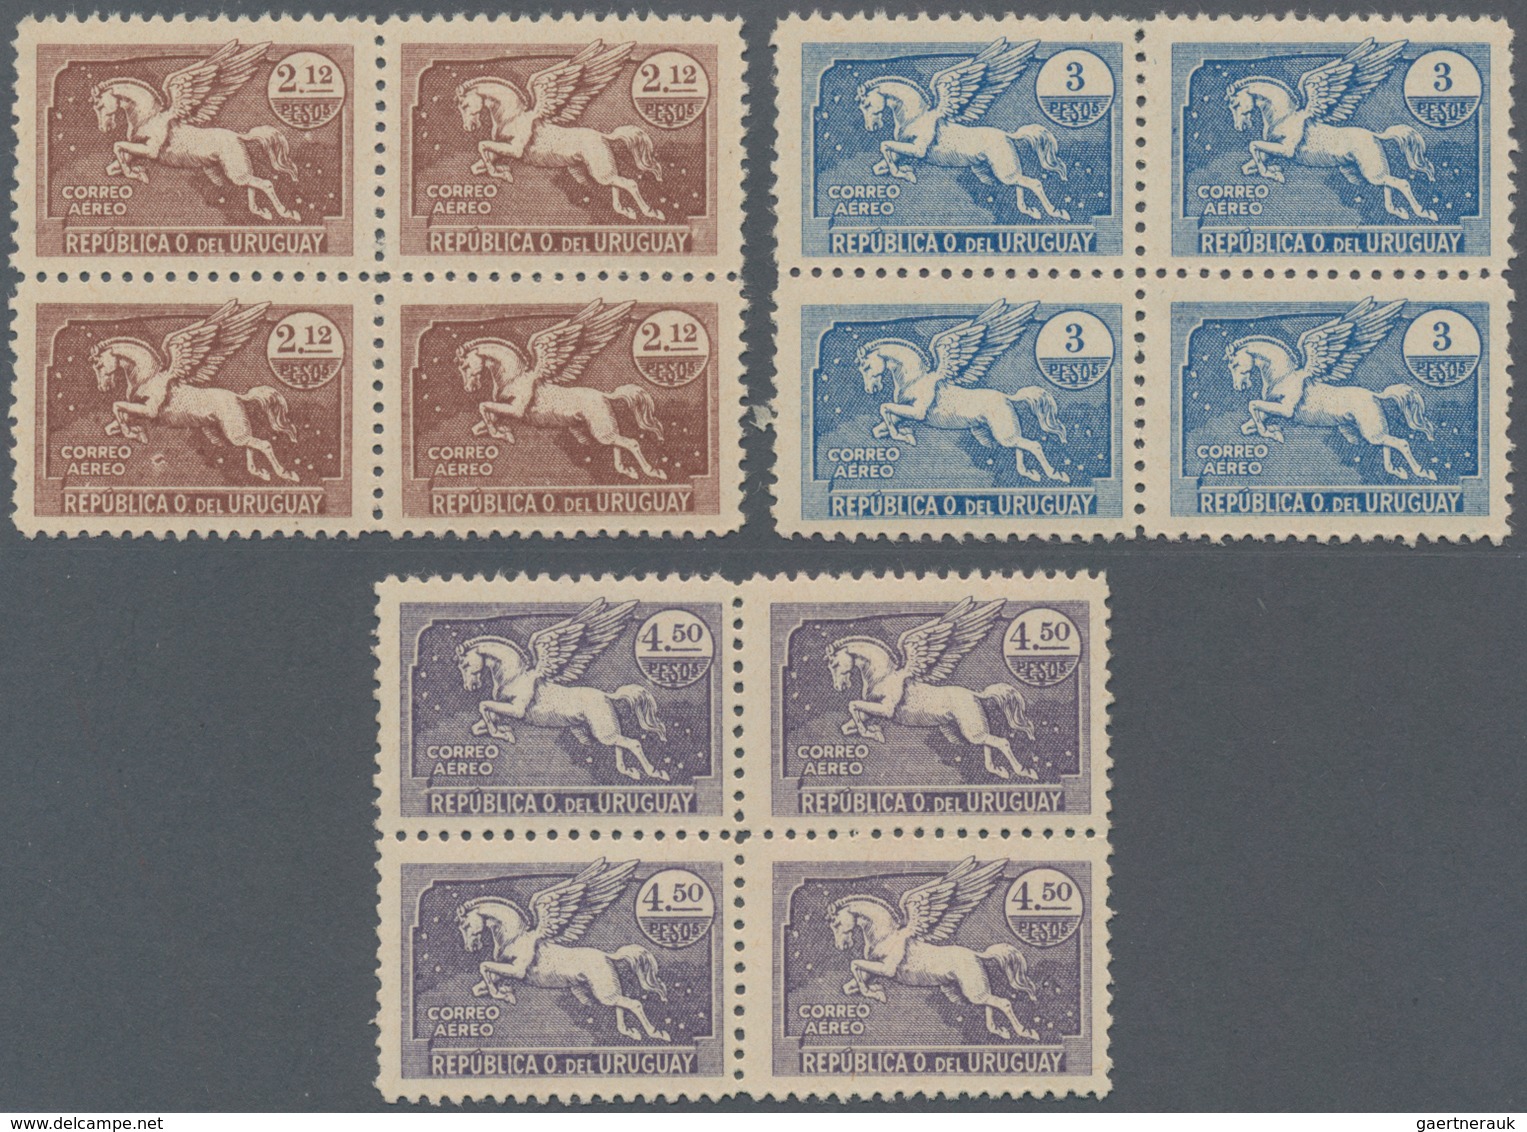 Uruguay: 1935 (ca.), Airmail Issue 'Pegasus' PROOFS Of Three Different Denominations 2.12p. Brown, 3 - Uruguay